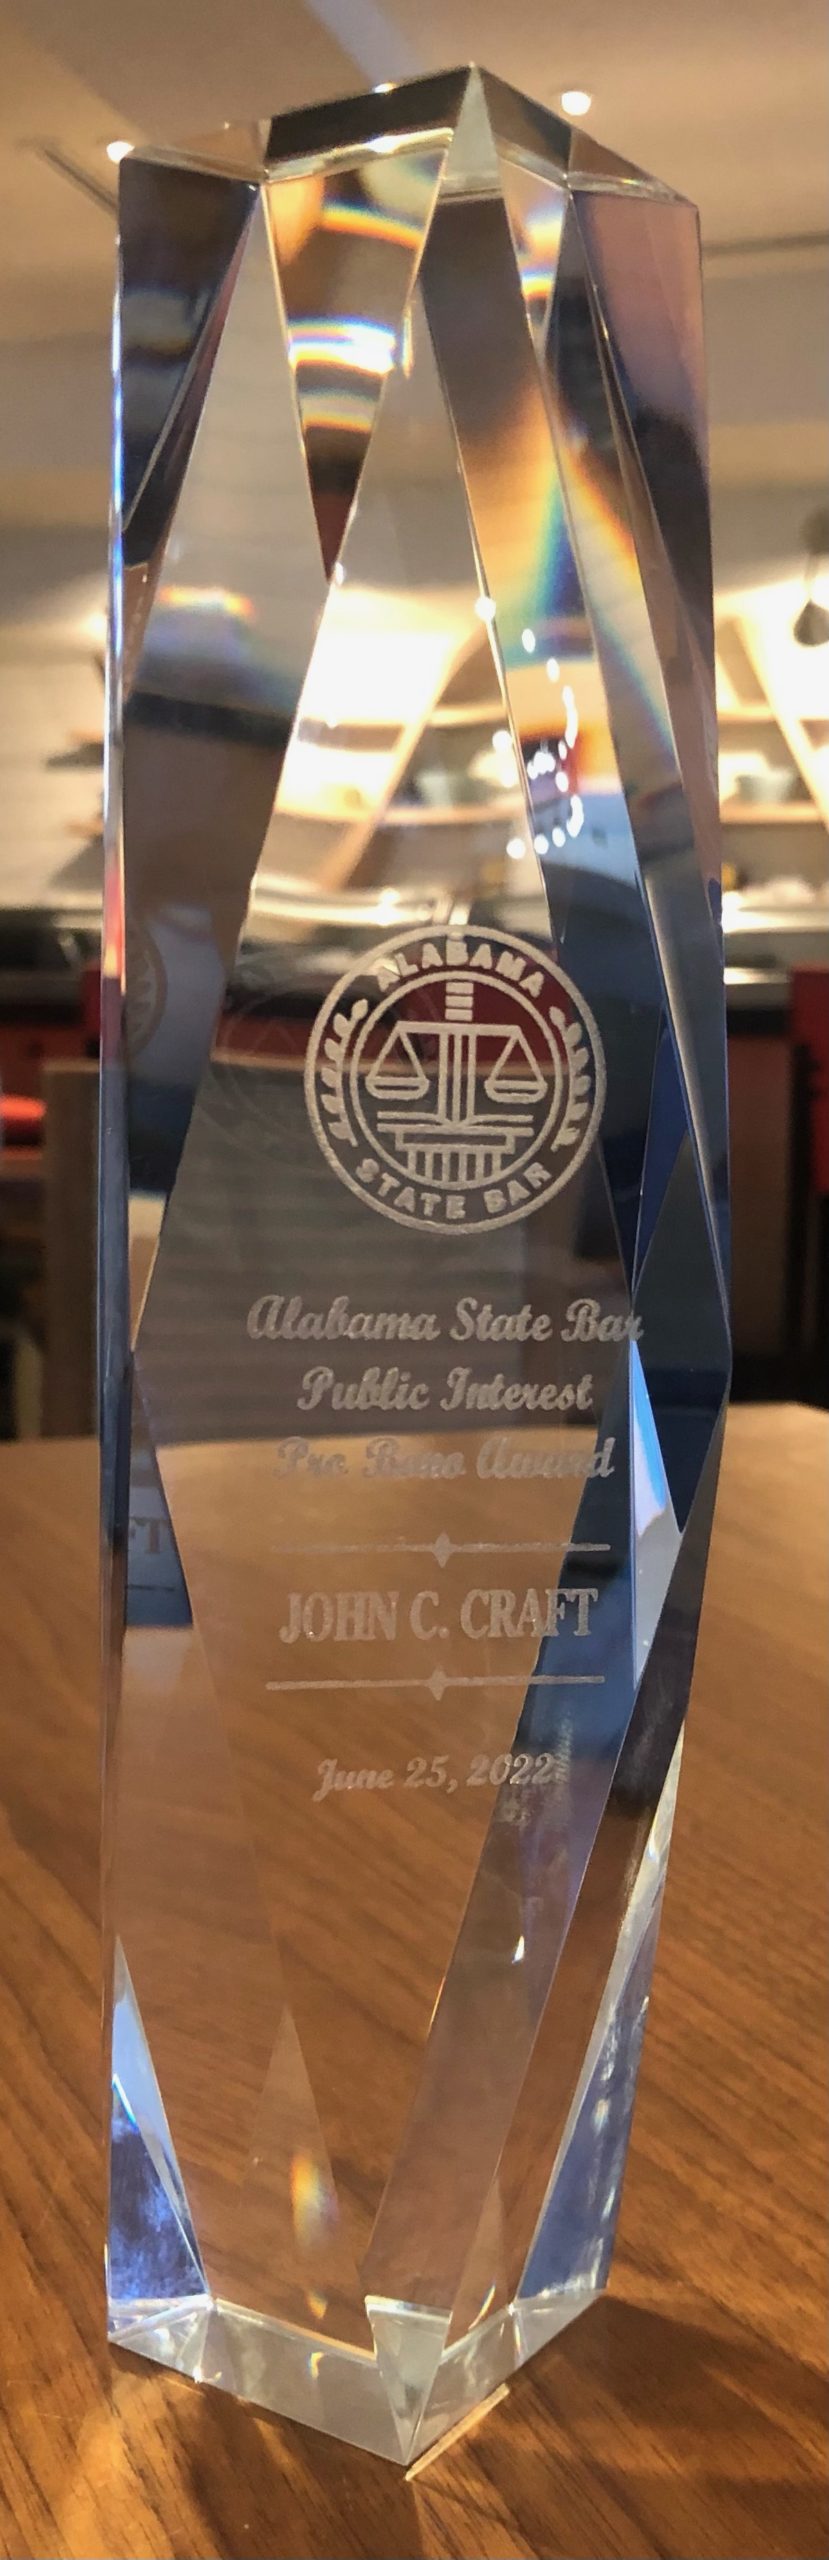 John Craft awarded the crystal 2022 Public Interest Attorney Award